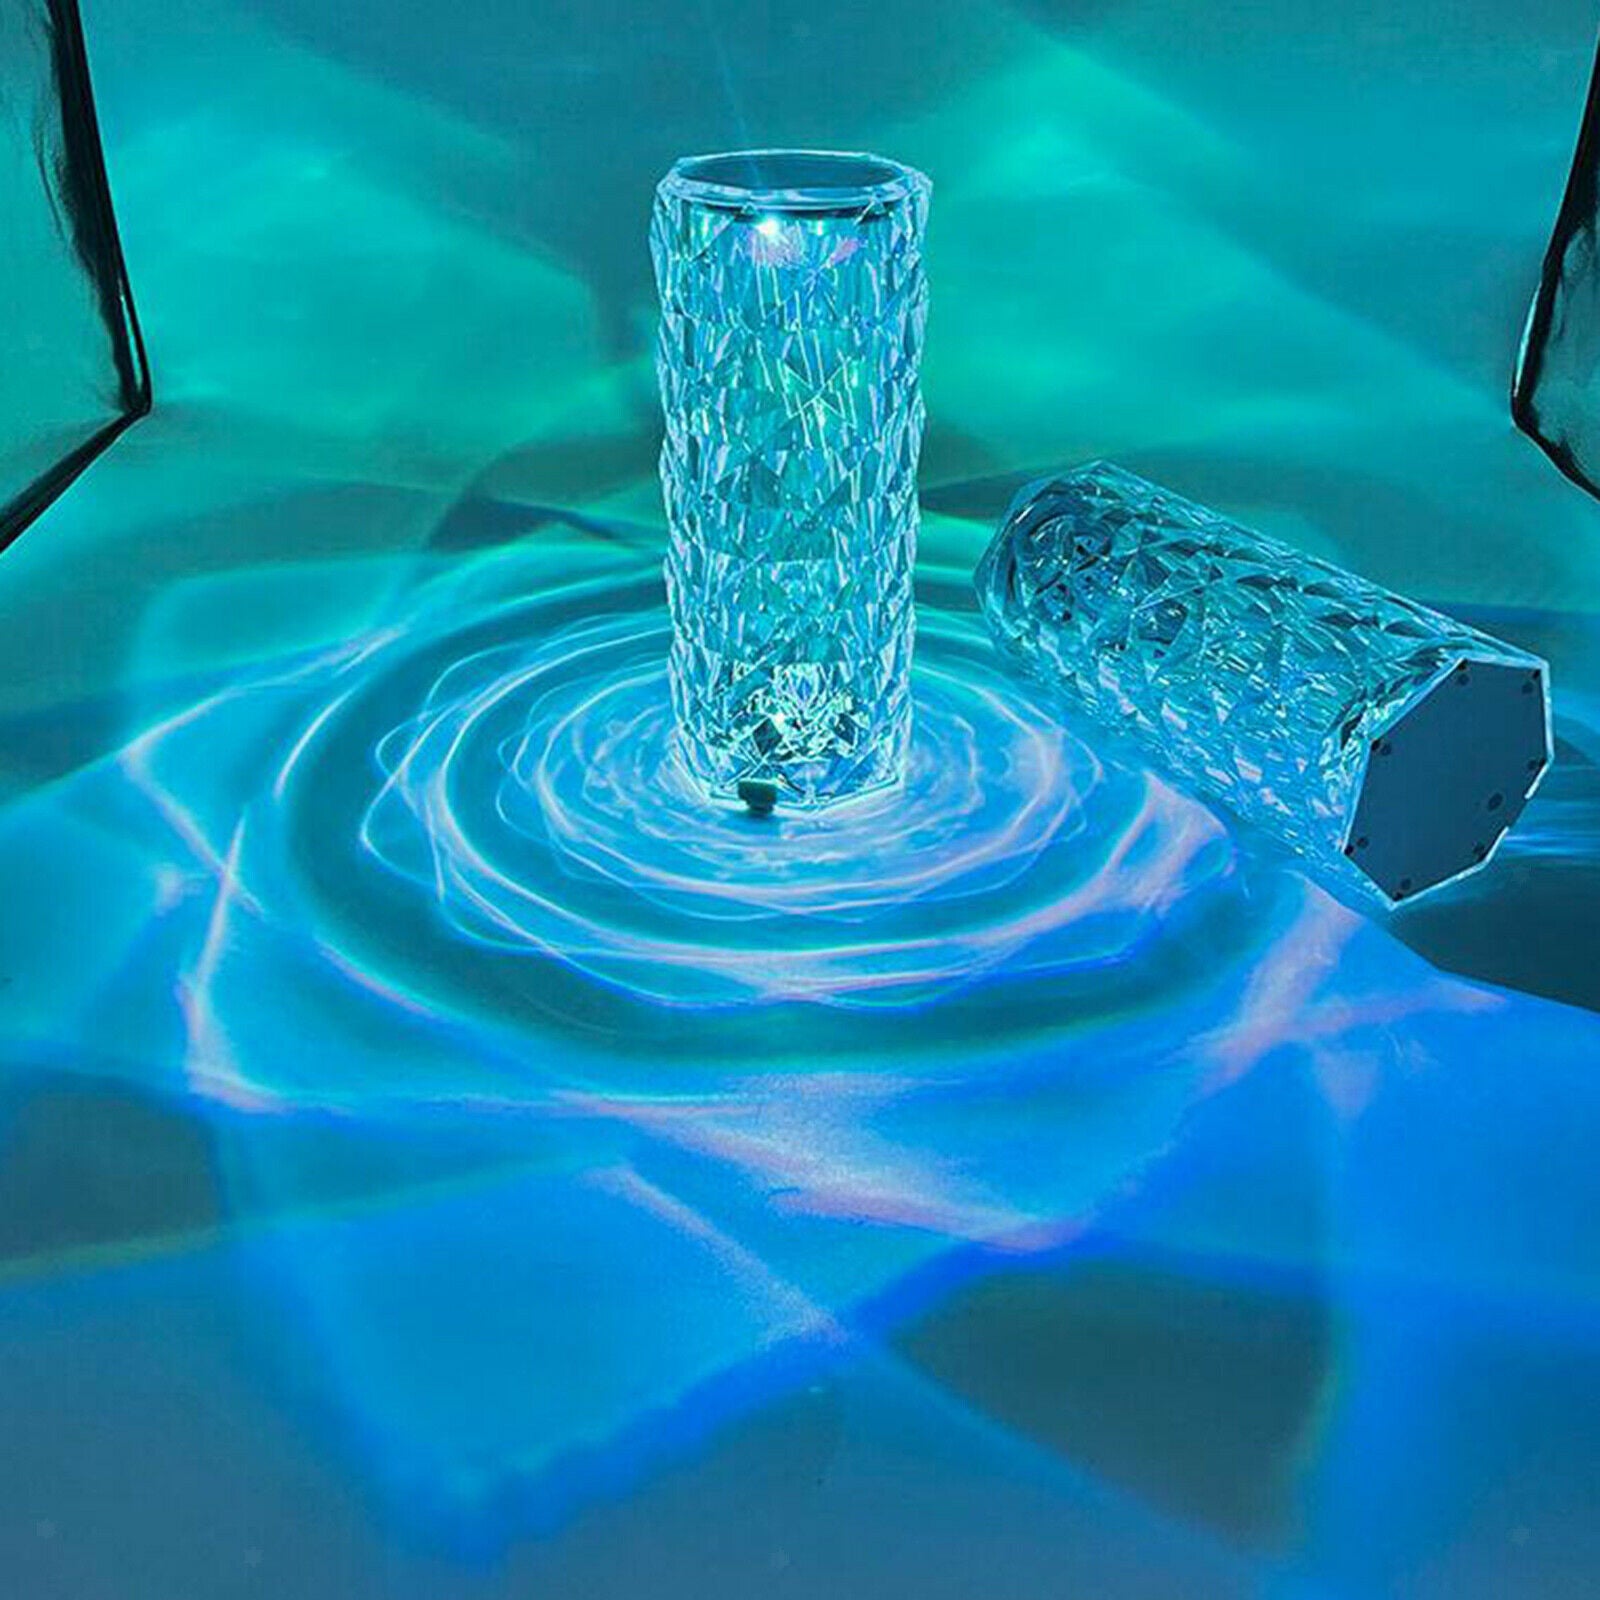 Metal Crystal Table Lamp Decorative Desk Light for Living Room Decorative